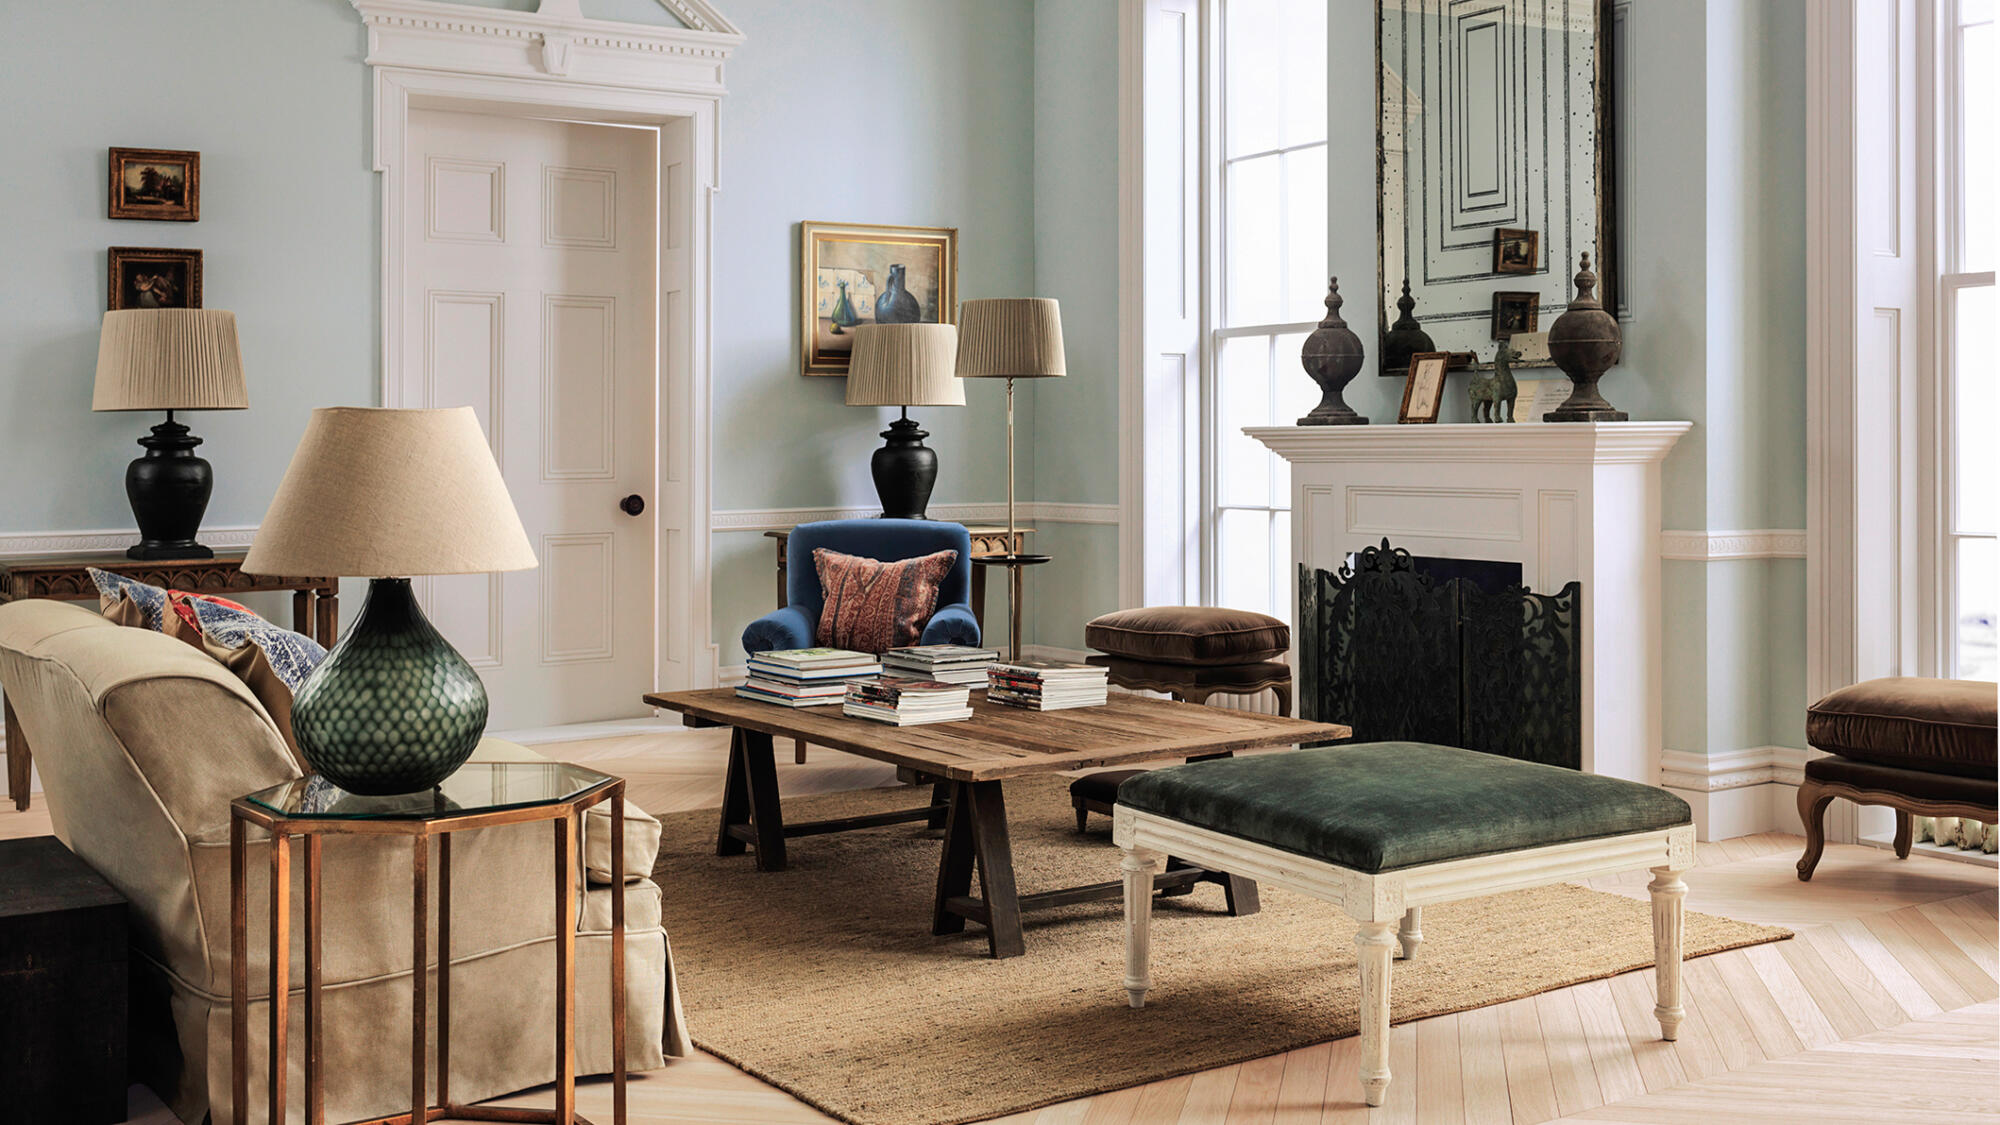 Elegant living room interior with stylish furniture and decor.